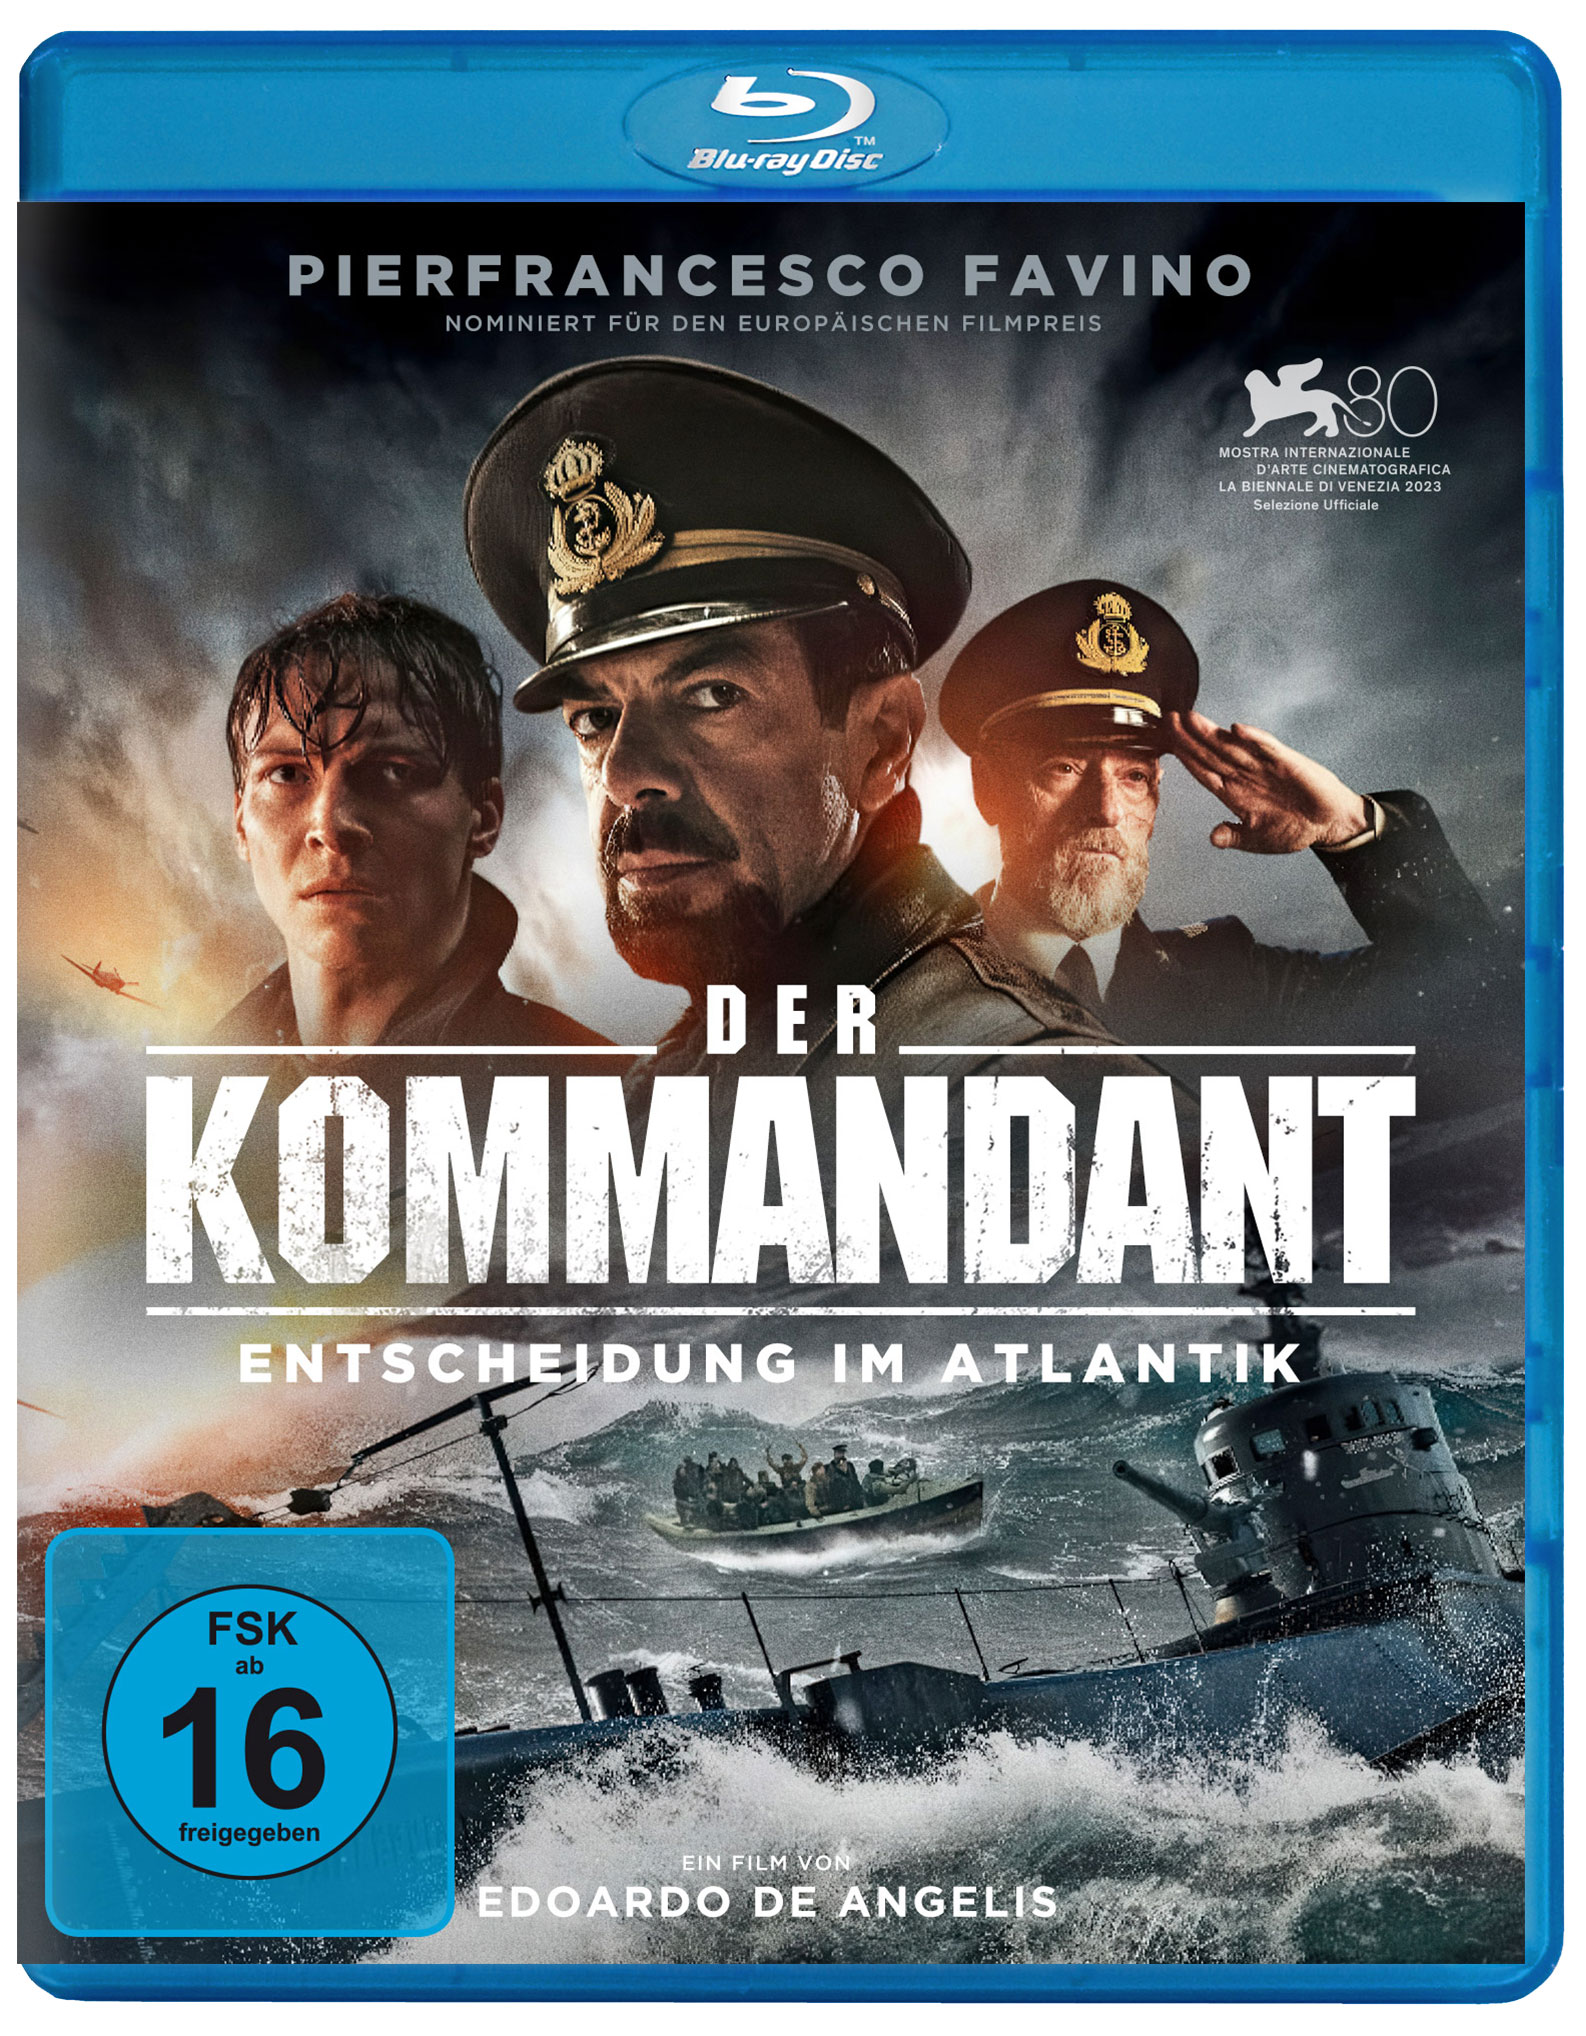 Der Kommandant - Entscheidung im Atlantik (Blu-ray)